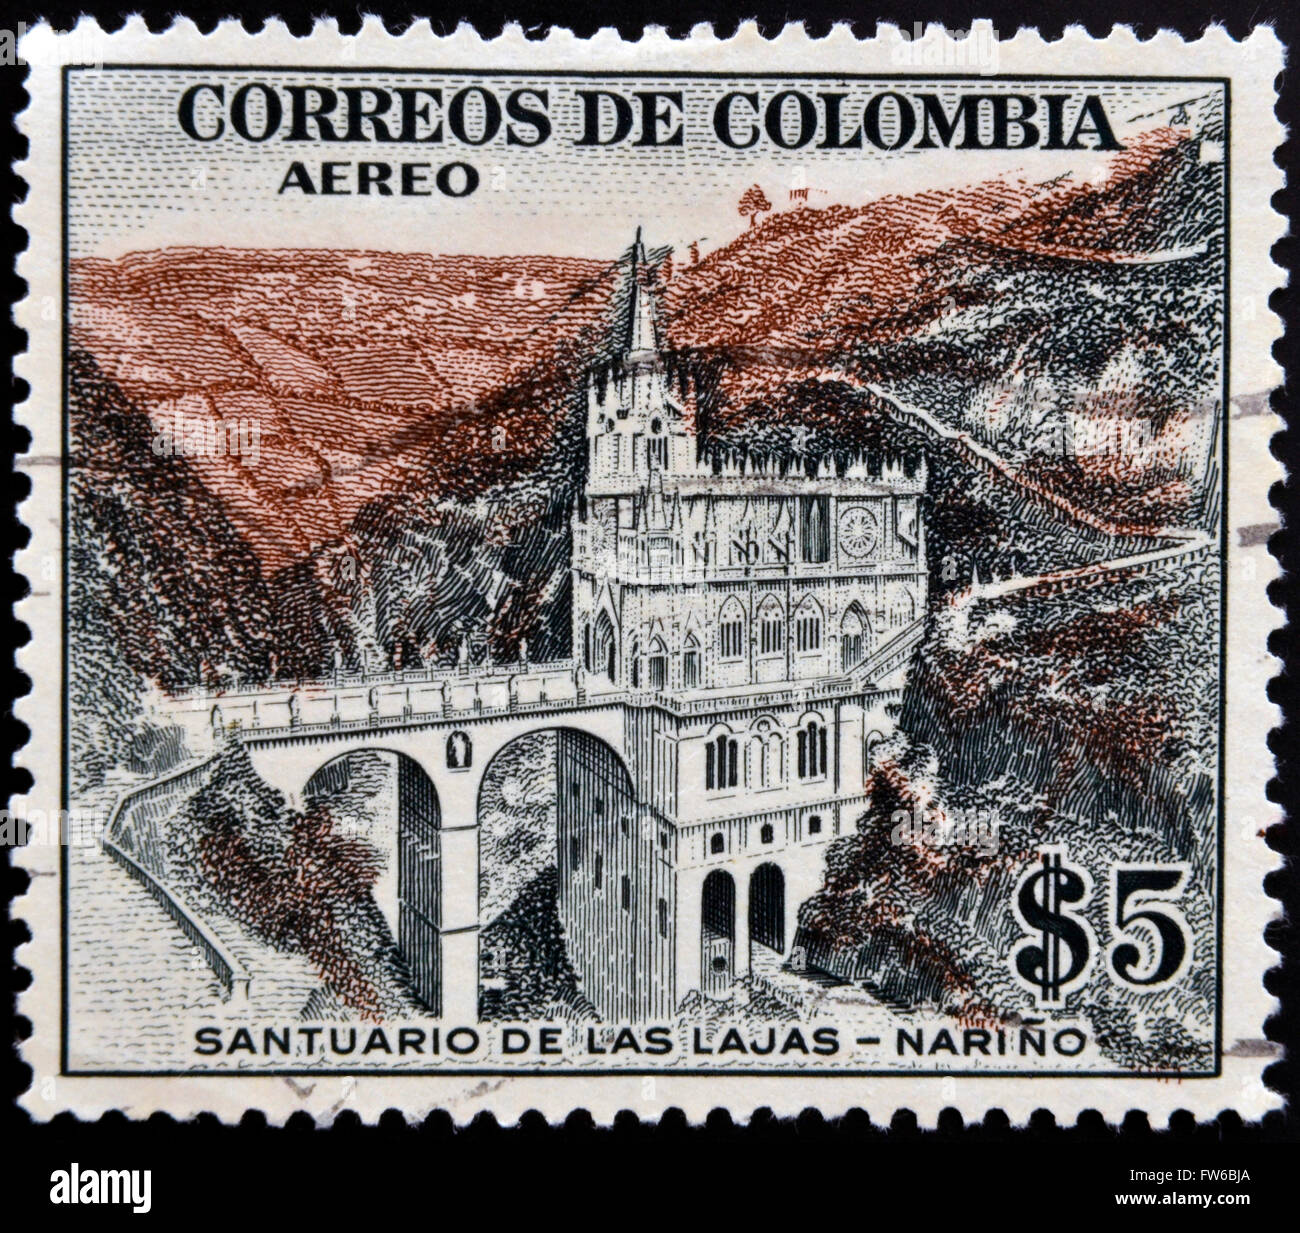 COLOMBIA - CIRCA 1980: A stamp printed in Colombia shows Santuario de las Lajas, Narino, circa 1980 Stock Photo